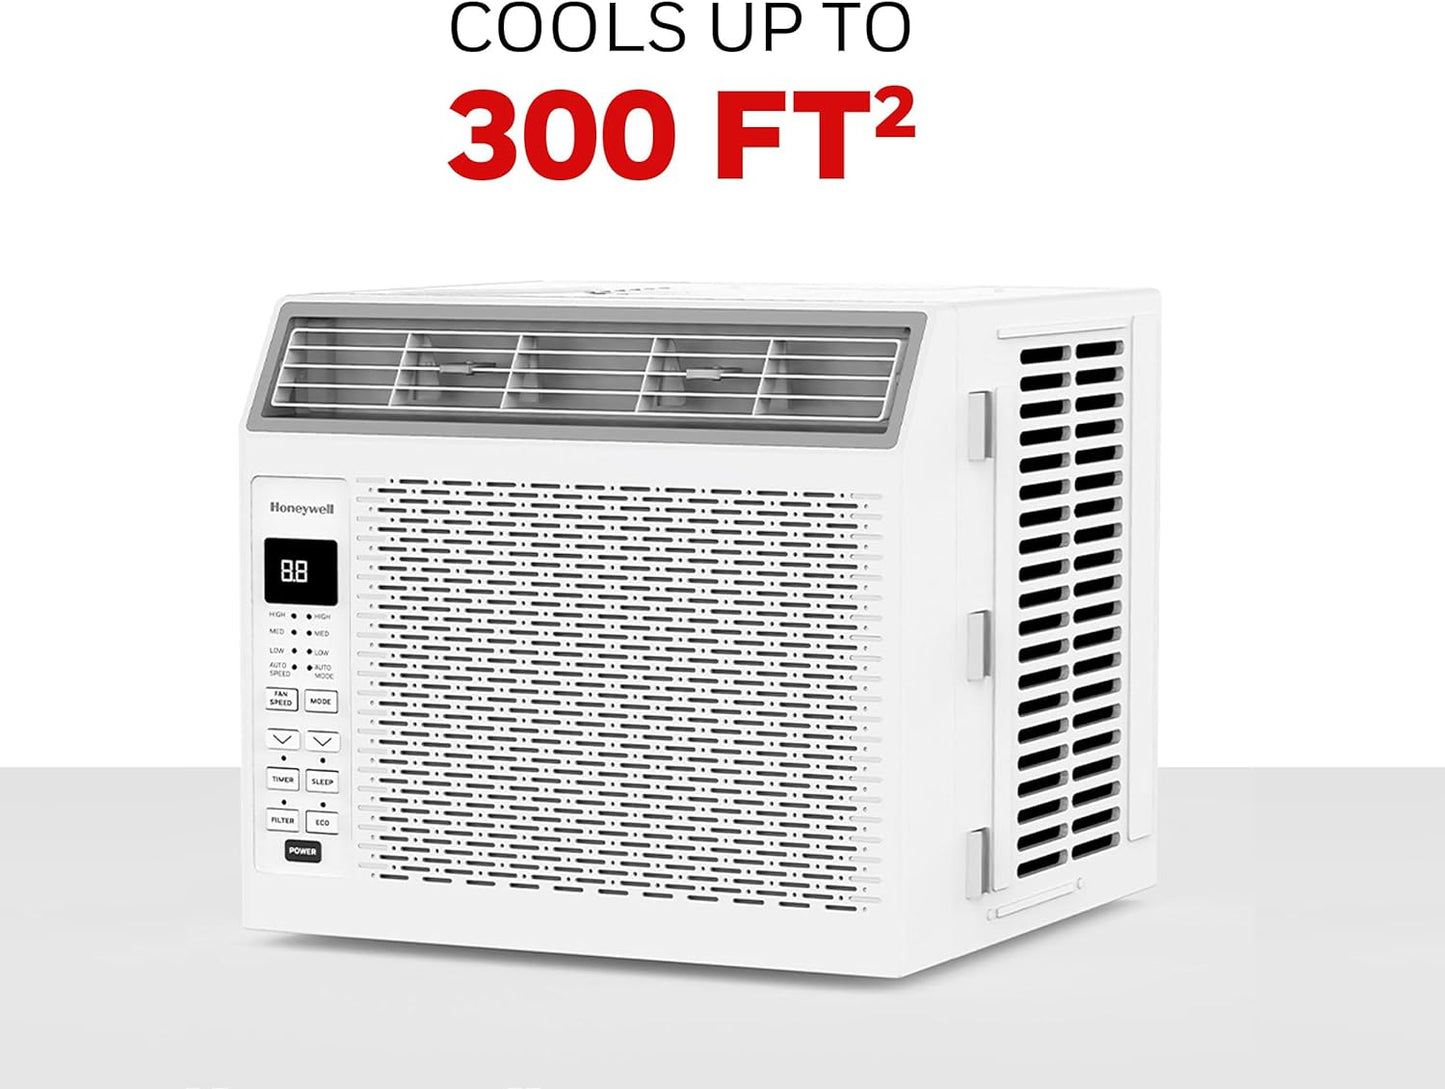 6000 BTU Window Air Conditioner